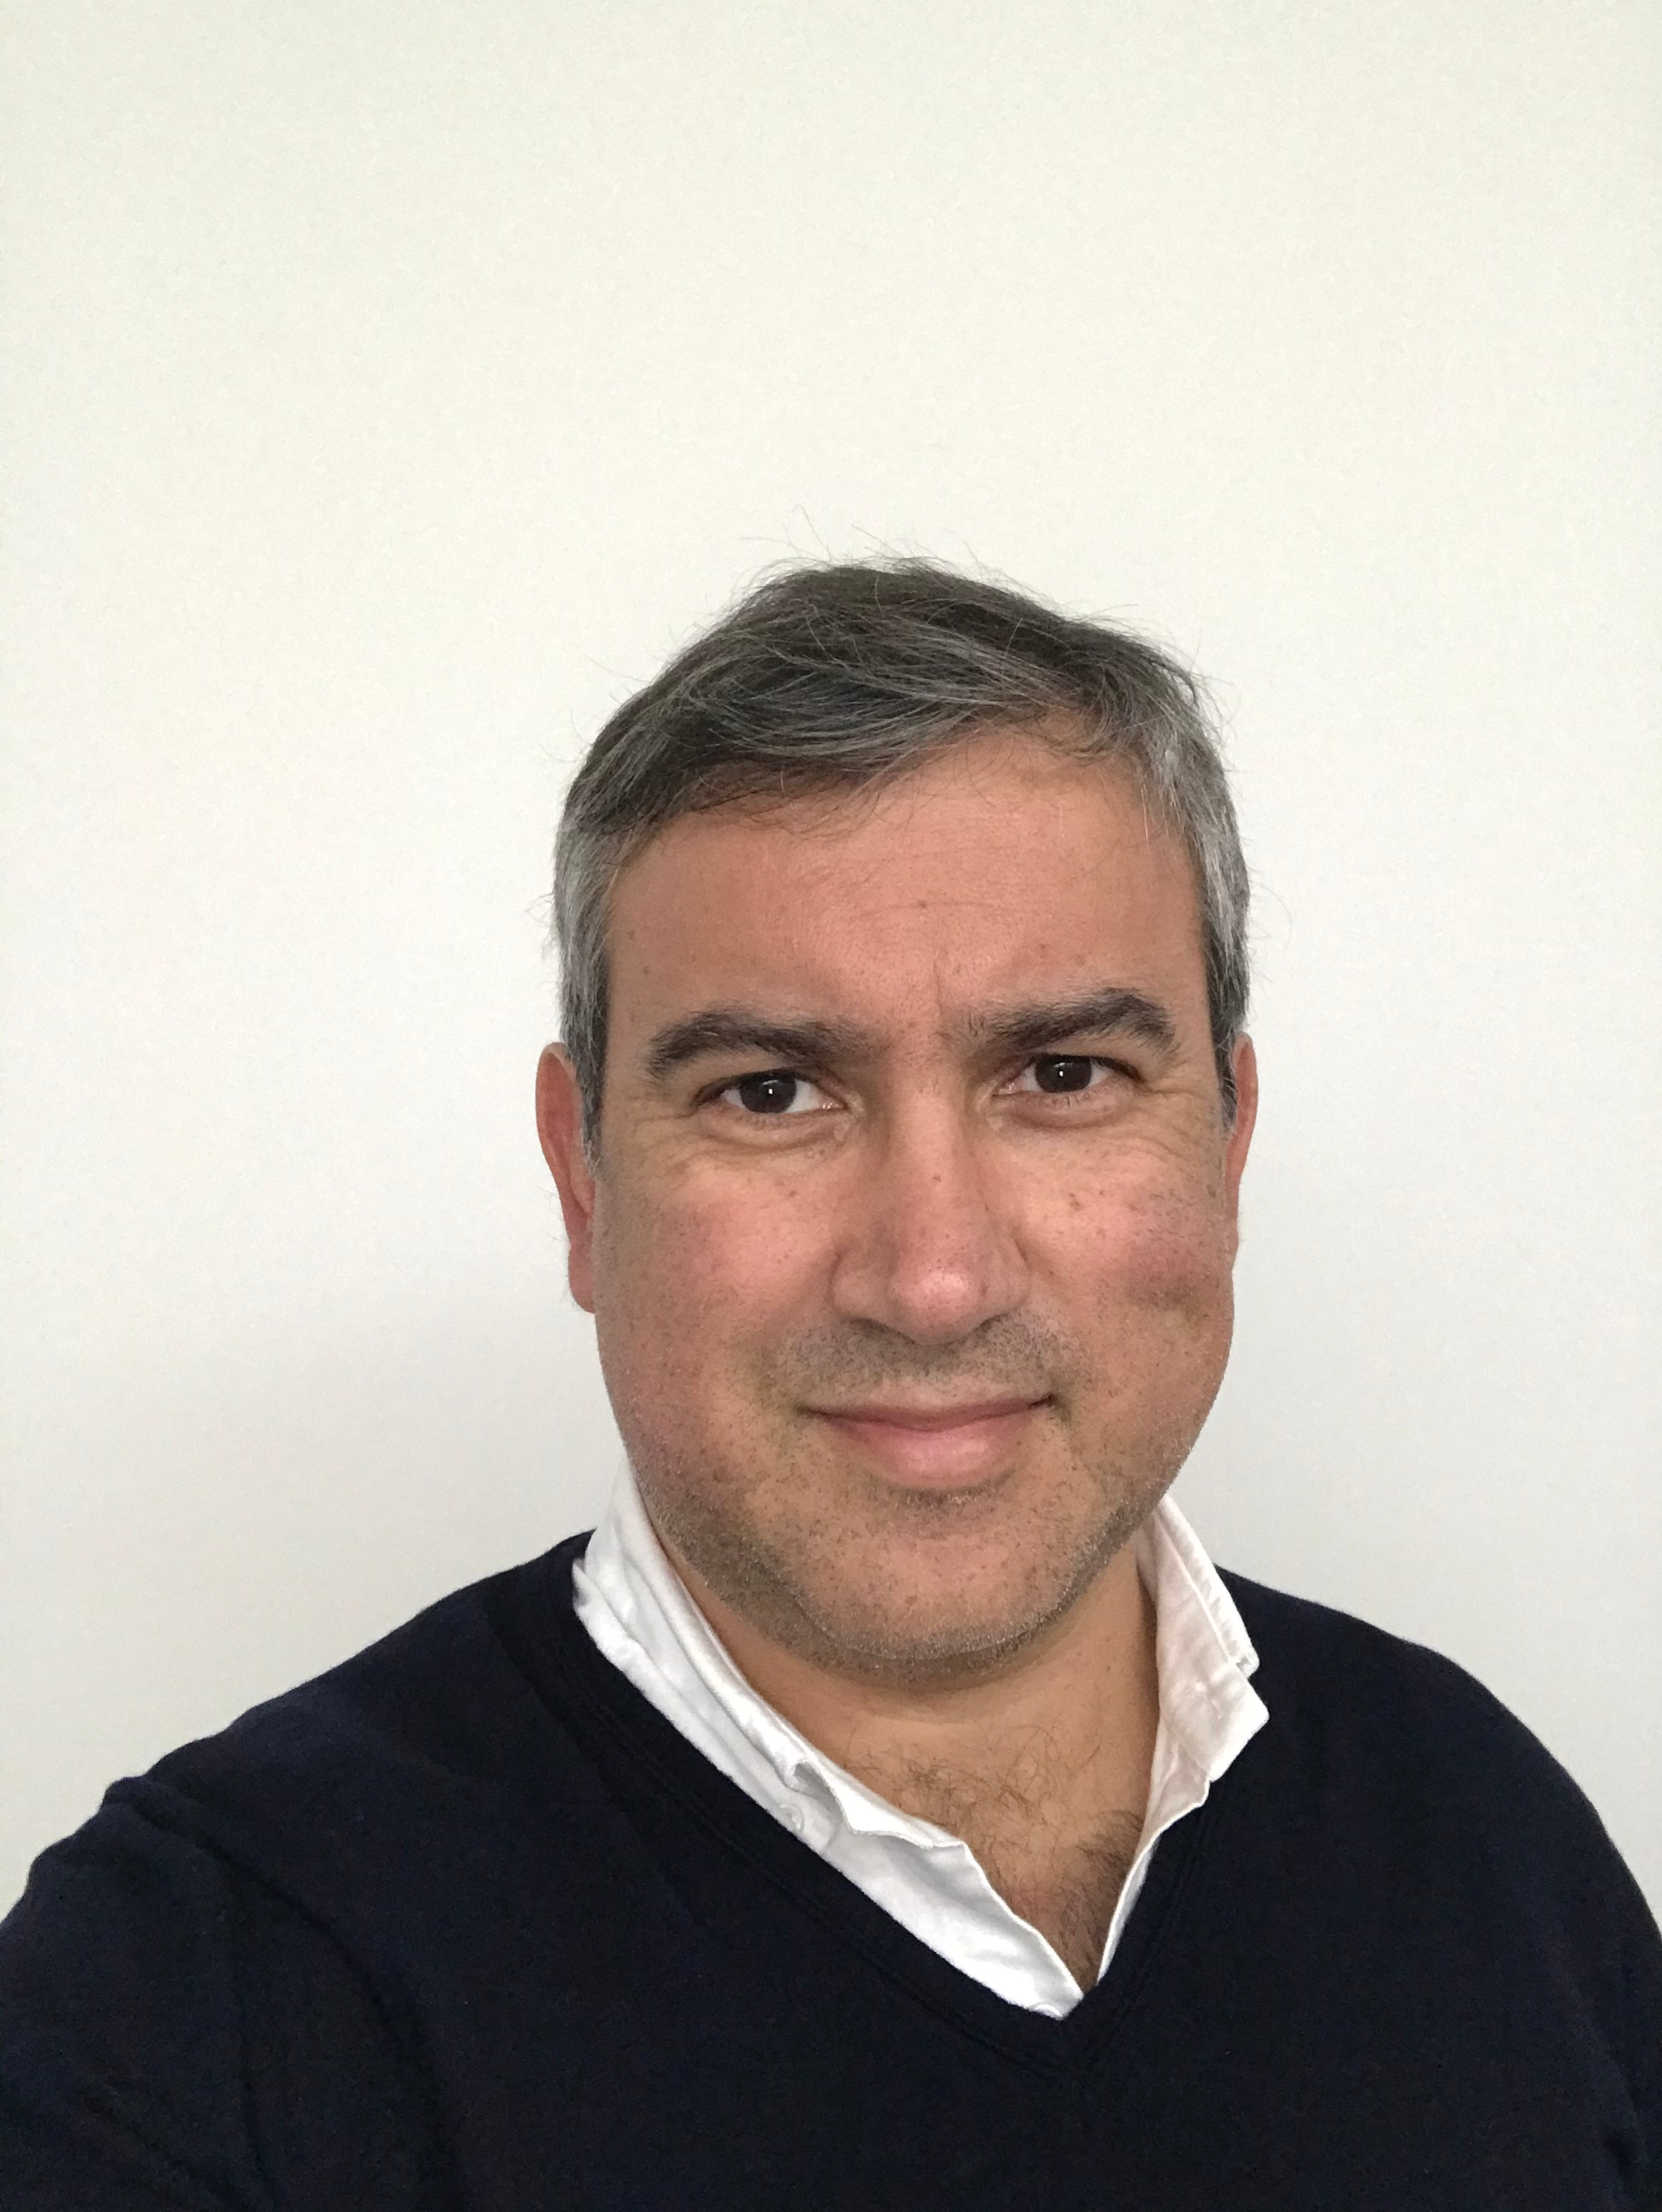 Vitor Vinagre, Engineering and Assets Manager - Asset Management Department at Águas de Portugal